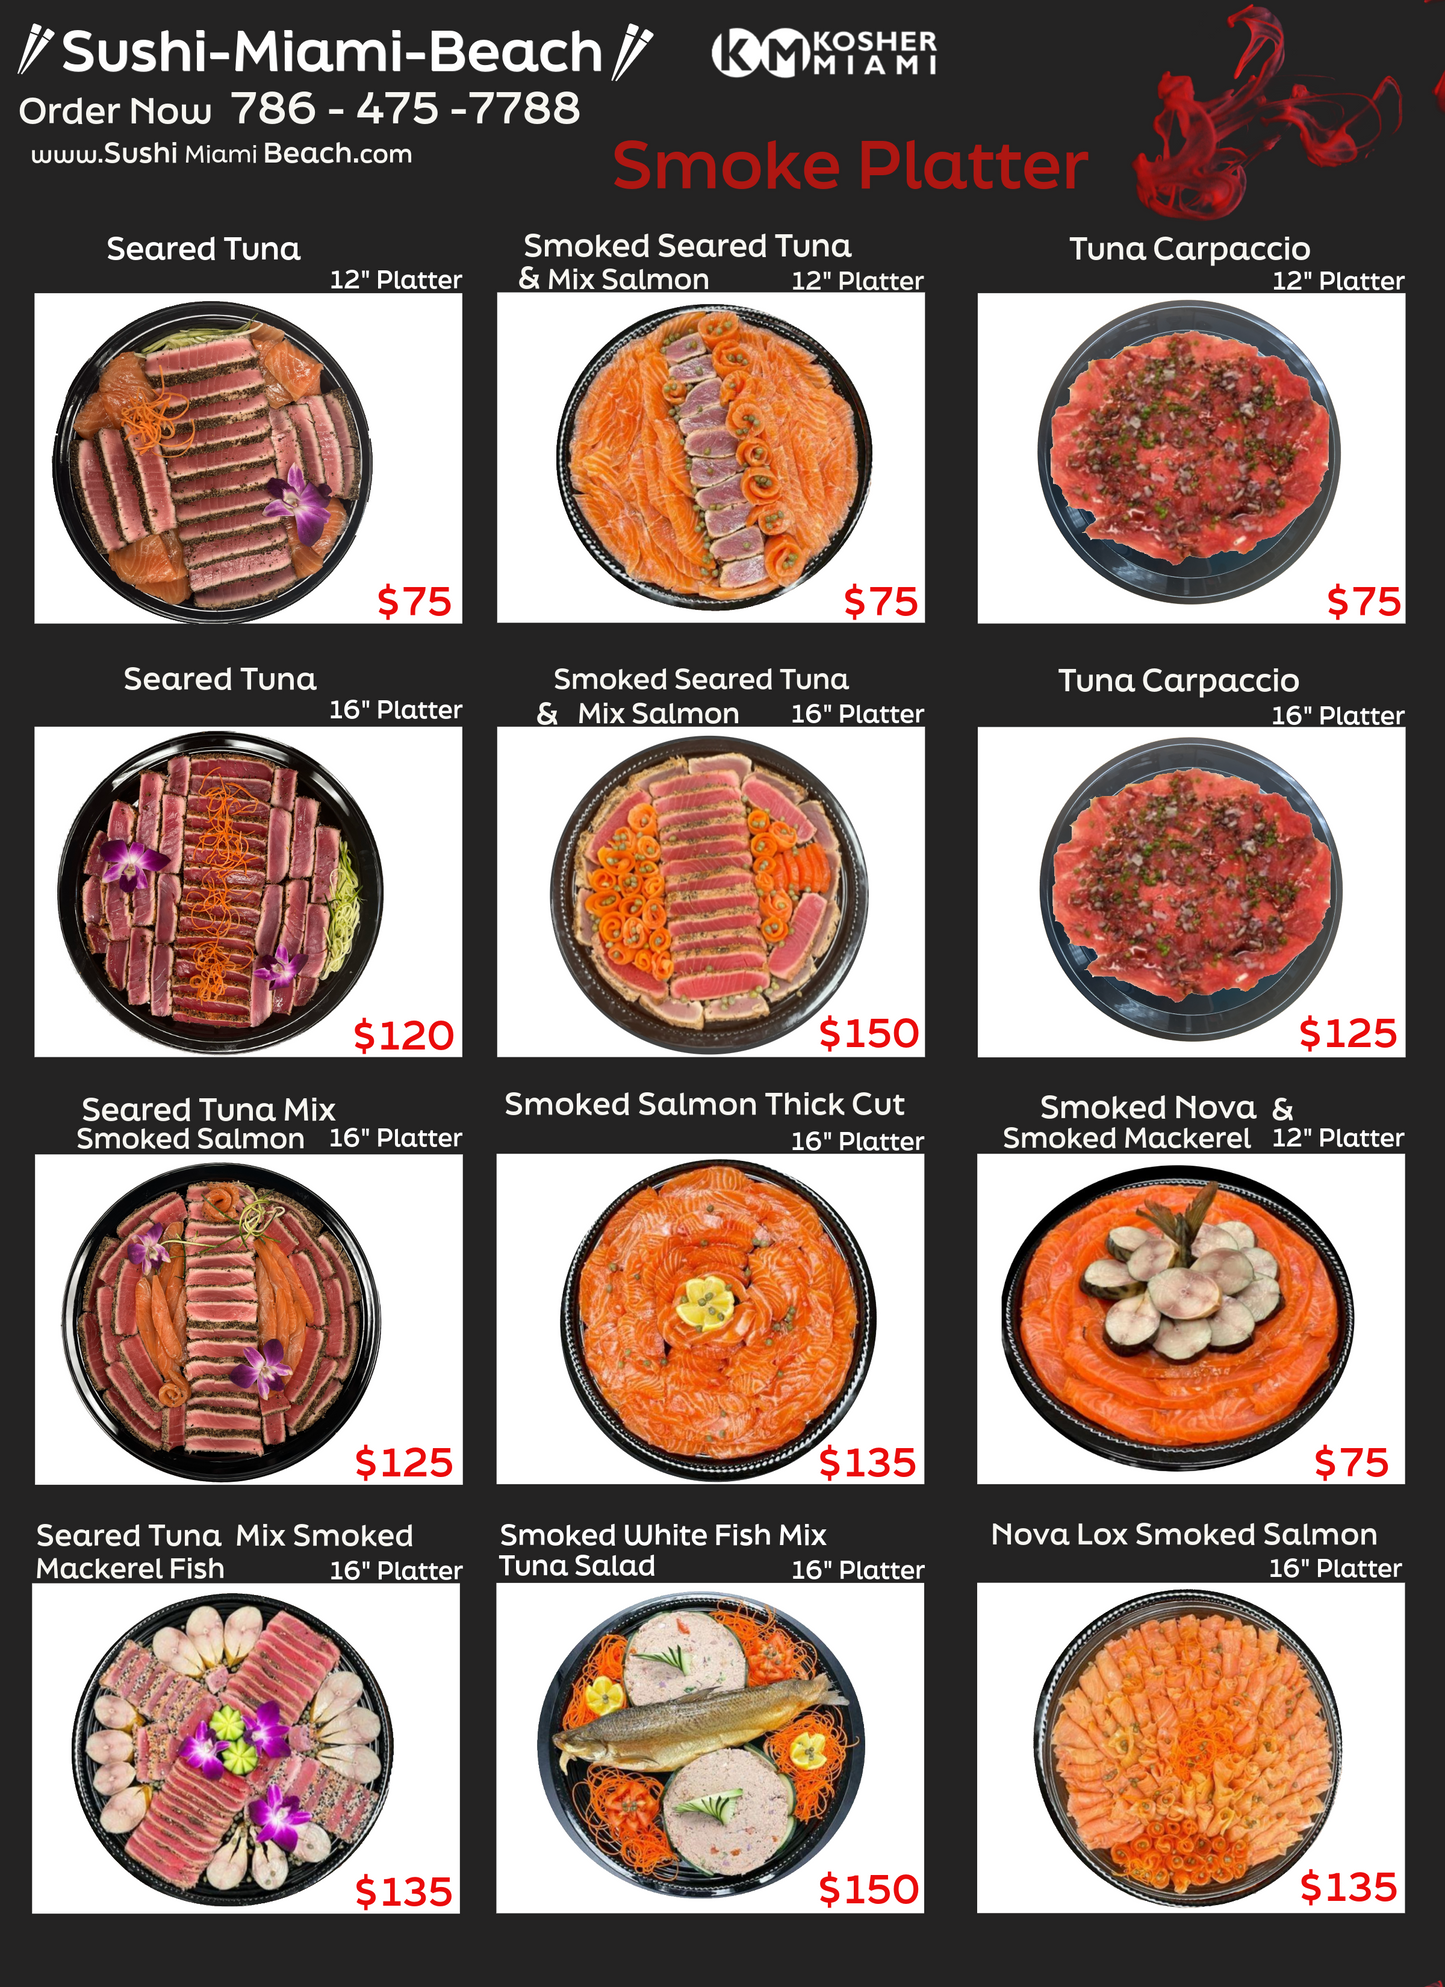 Seared Tuna Platters 12"- 16"